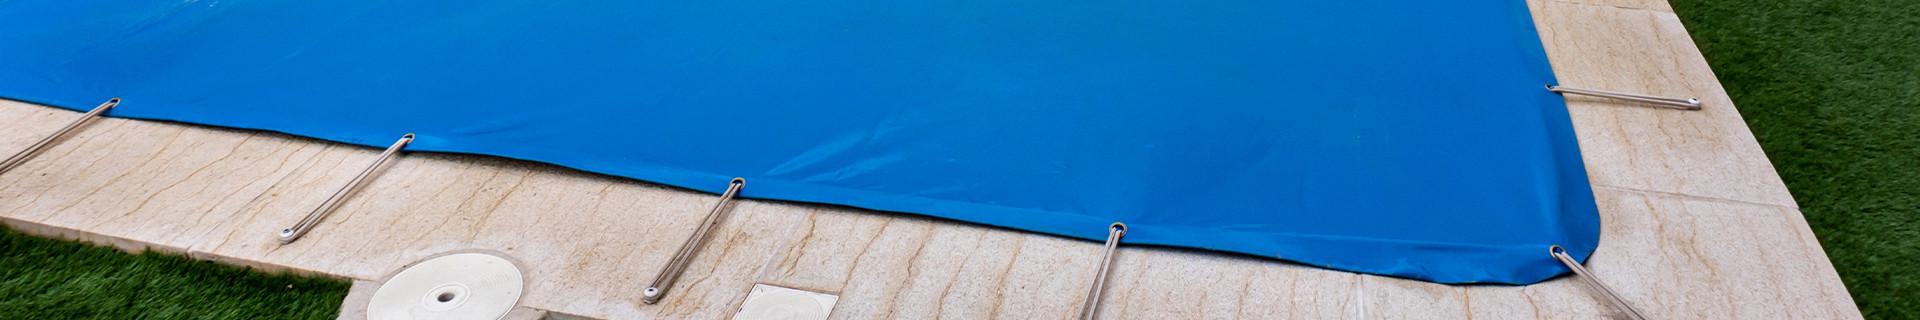 Bâche protection piscine | Direct Filet